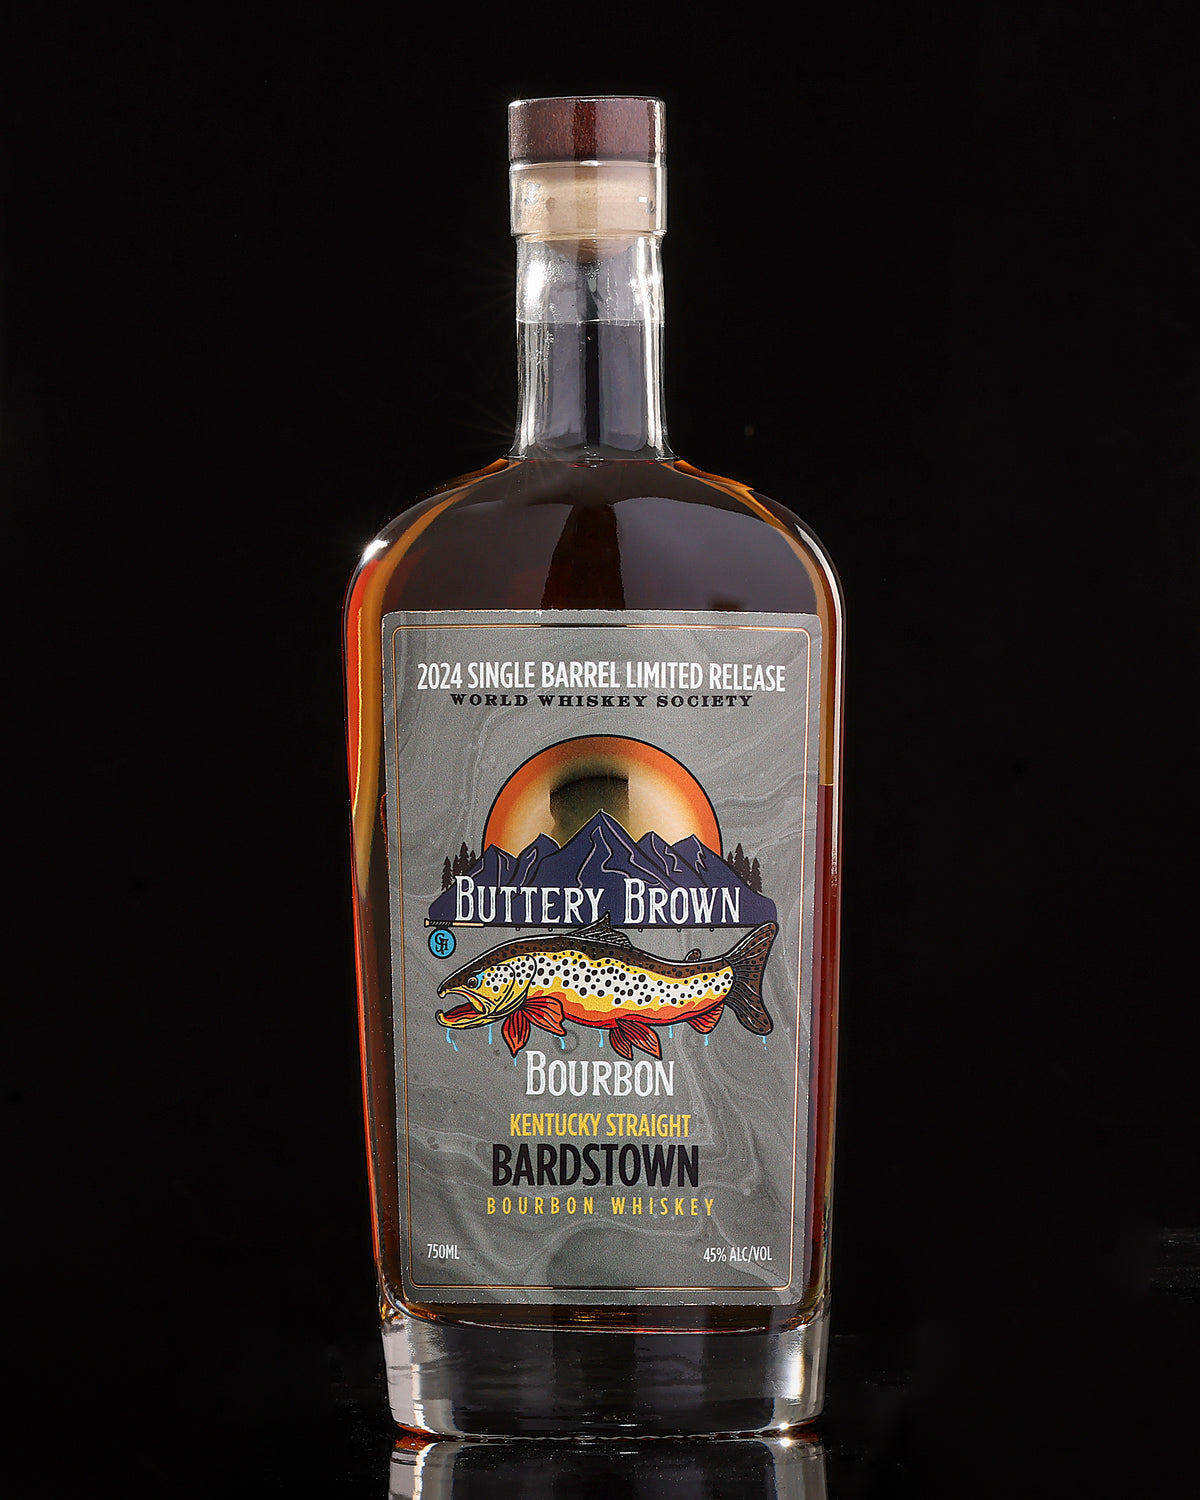 Buttery Brown Bourbon – Kentucky Straight Bardstown Bourbon Whiskey